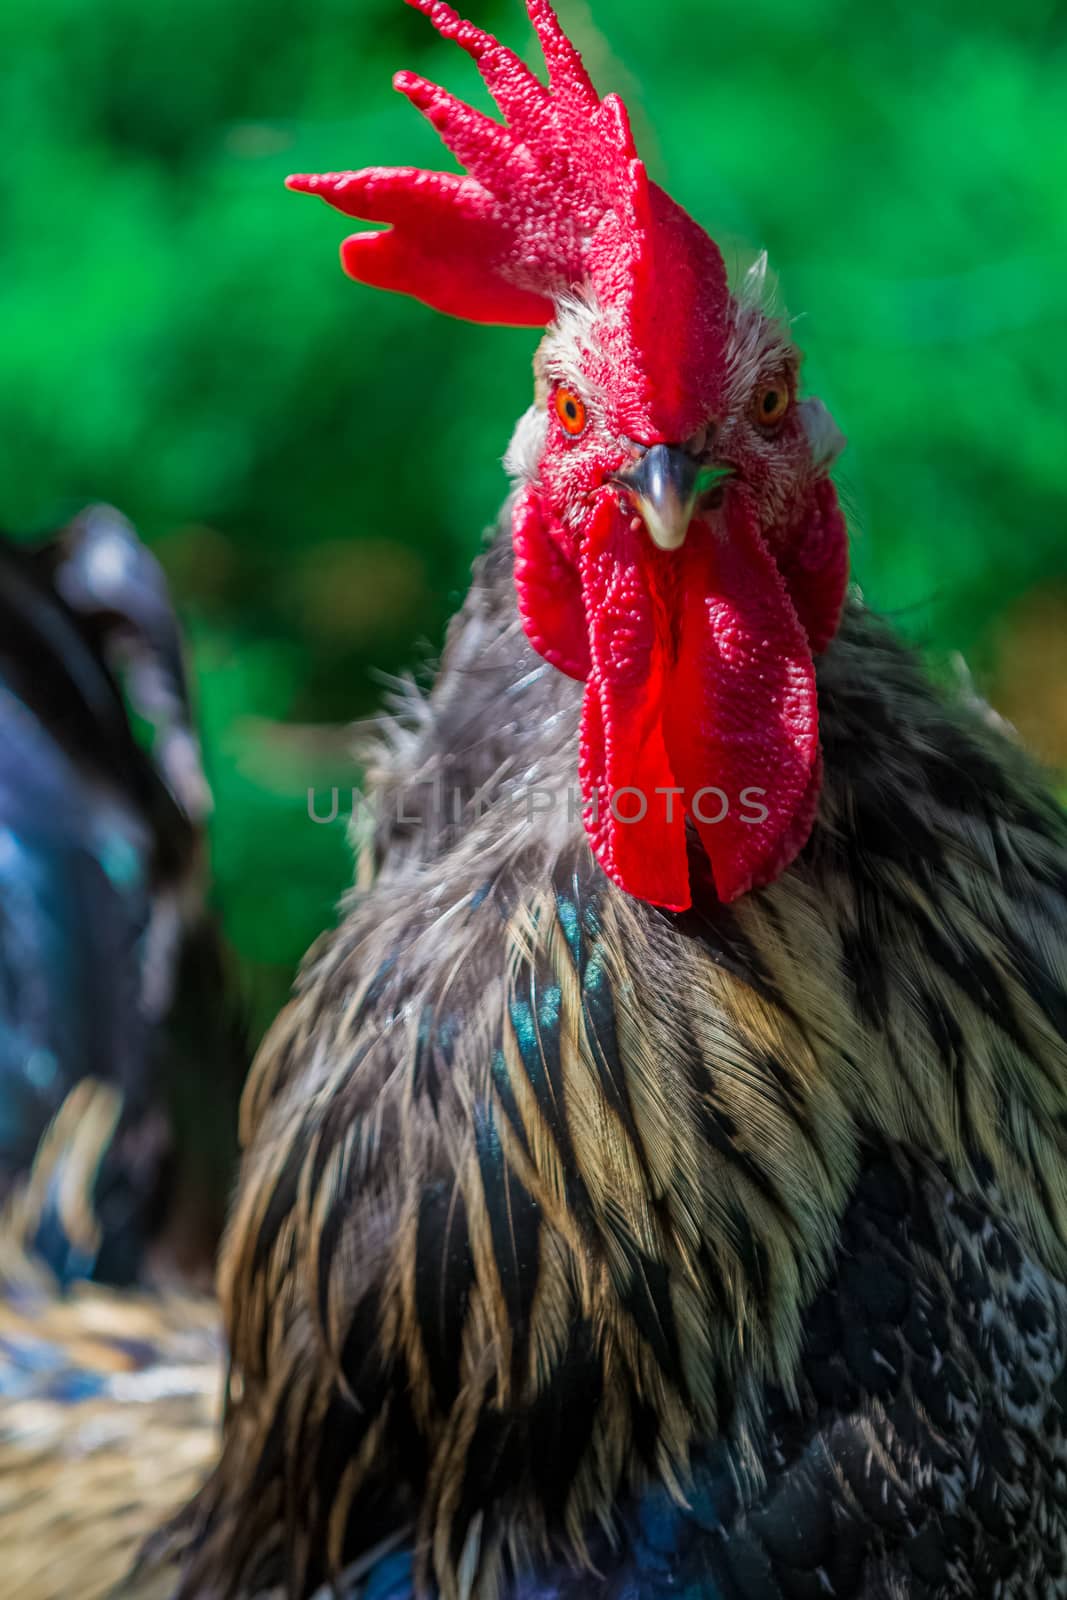 Rural cock portrait close up in a farm